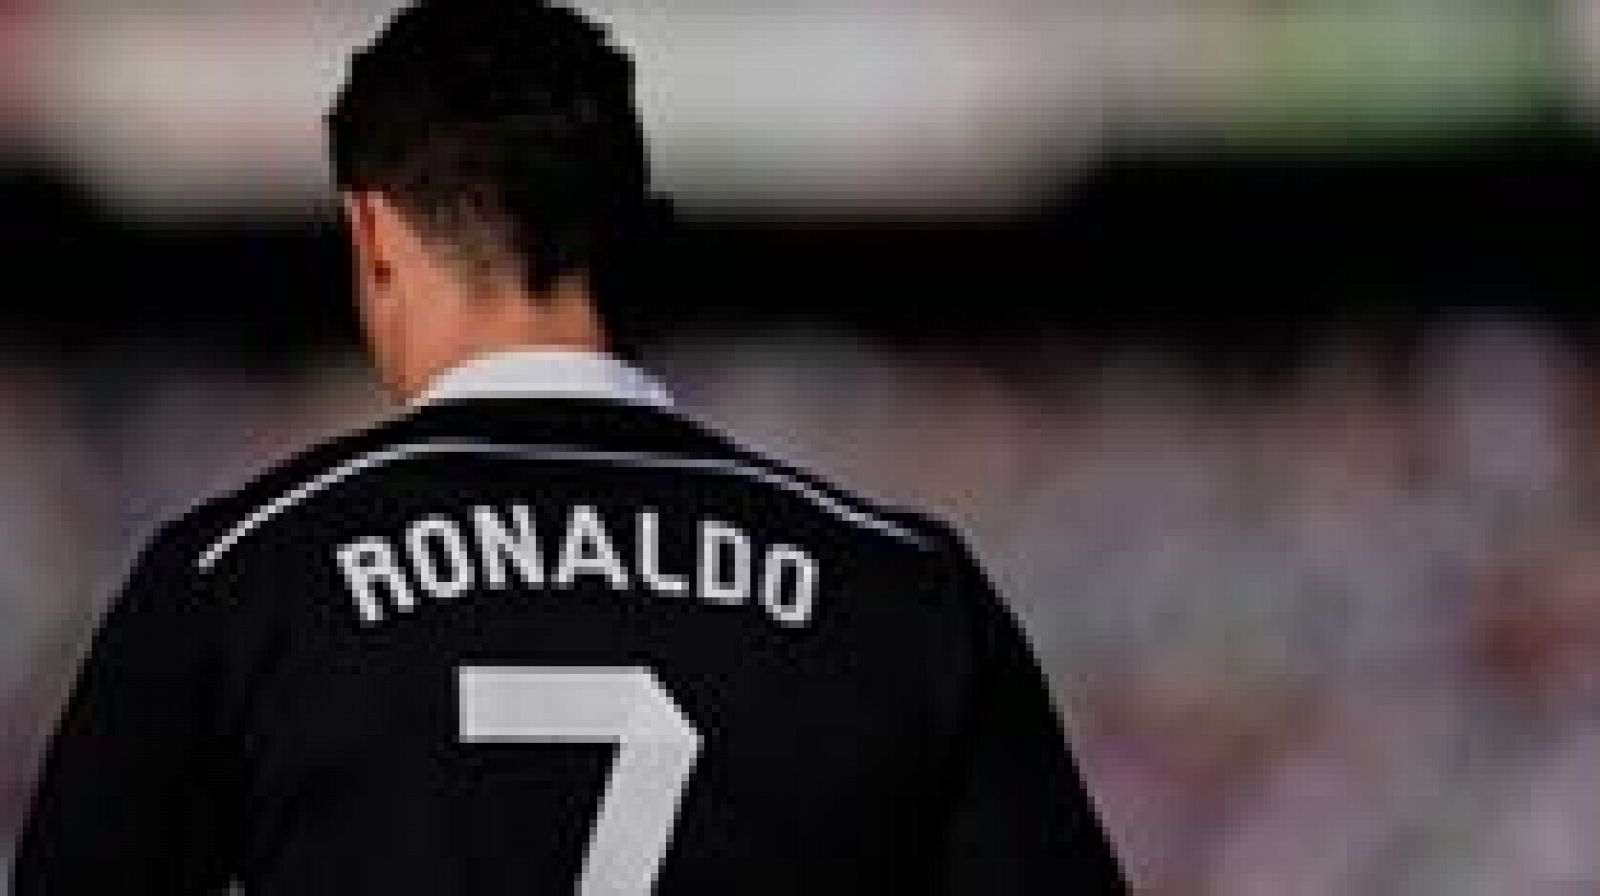 Telediario 1: El dilema de Cristiano Ronaldo | RTVE Play